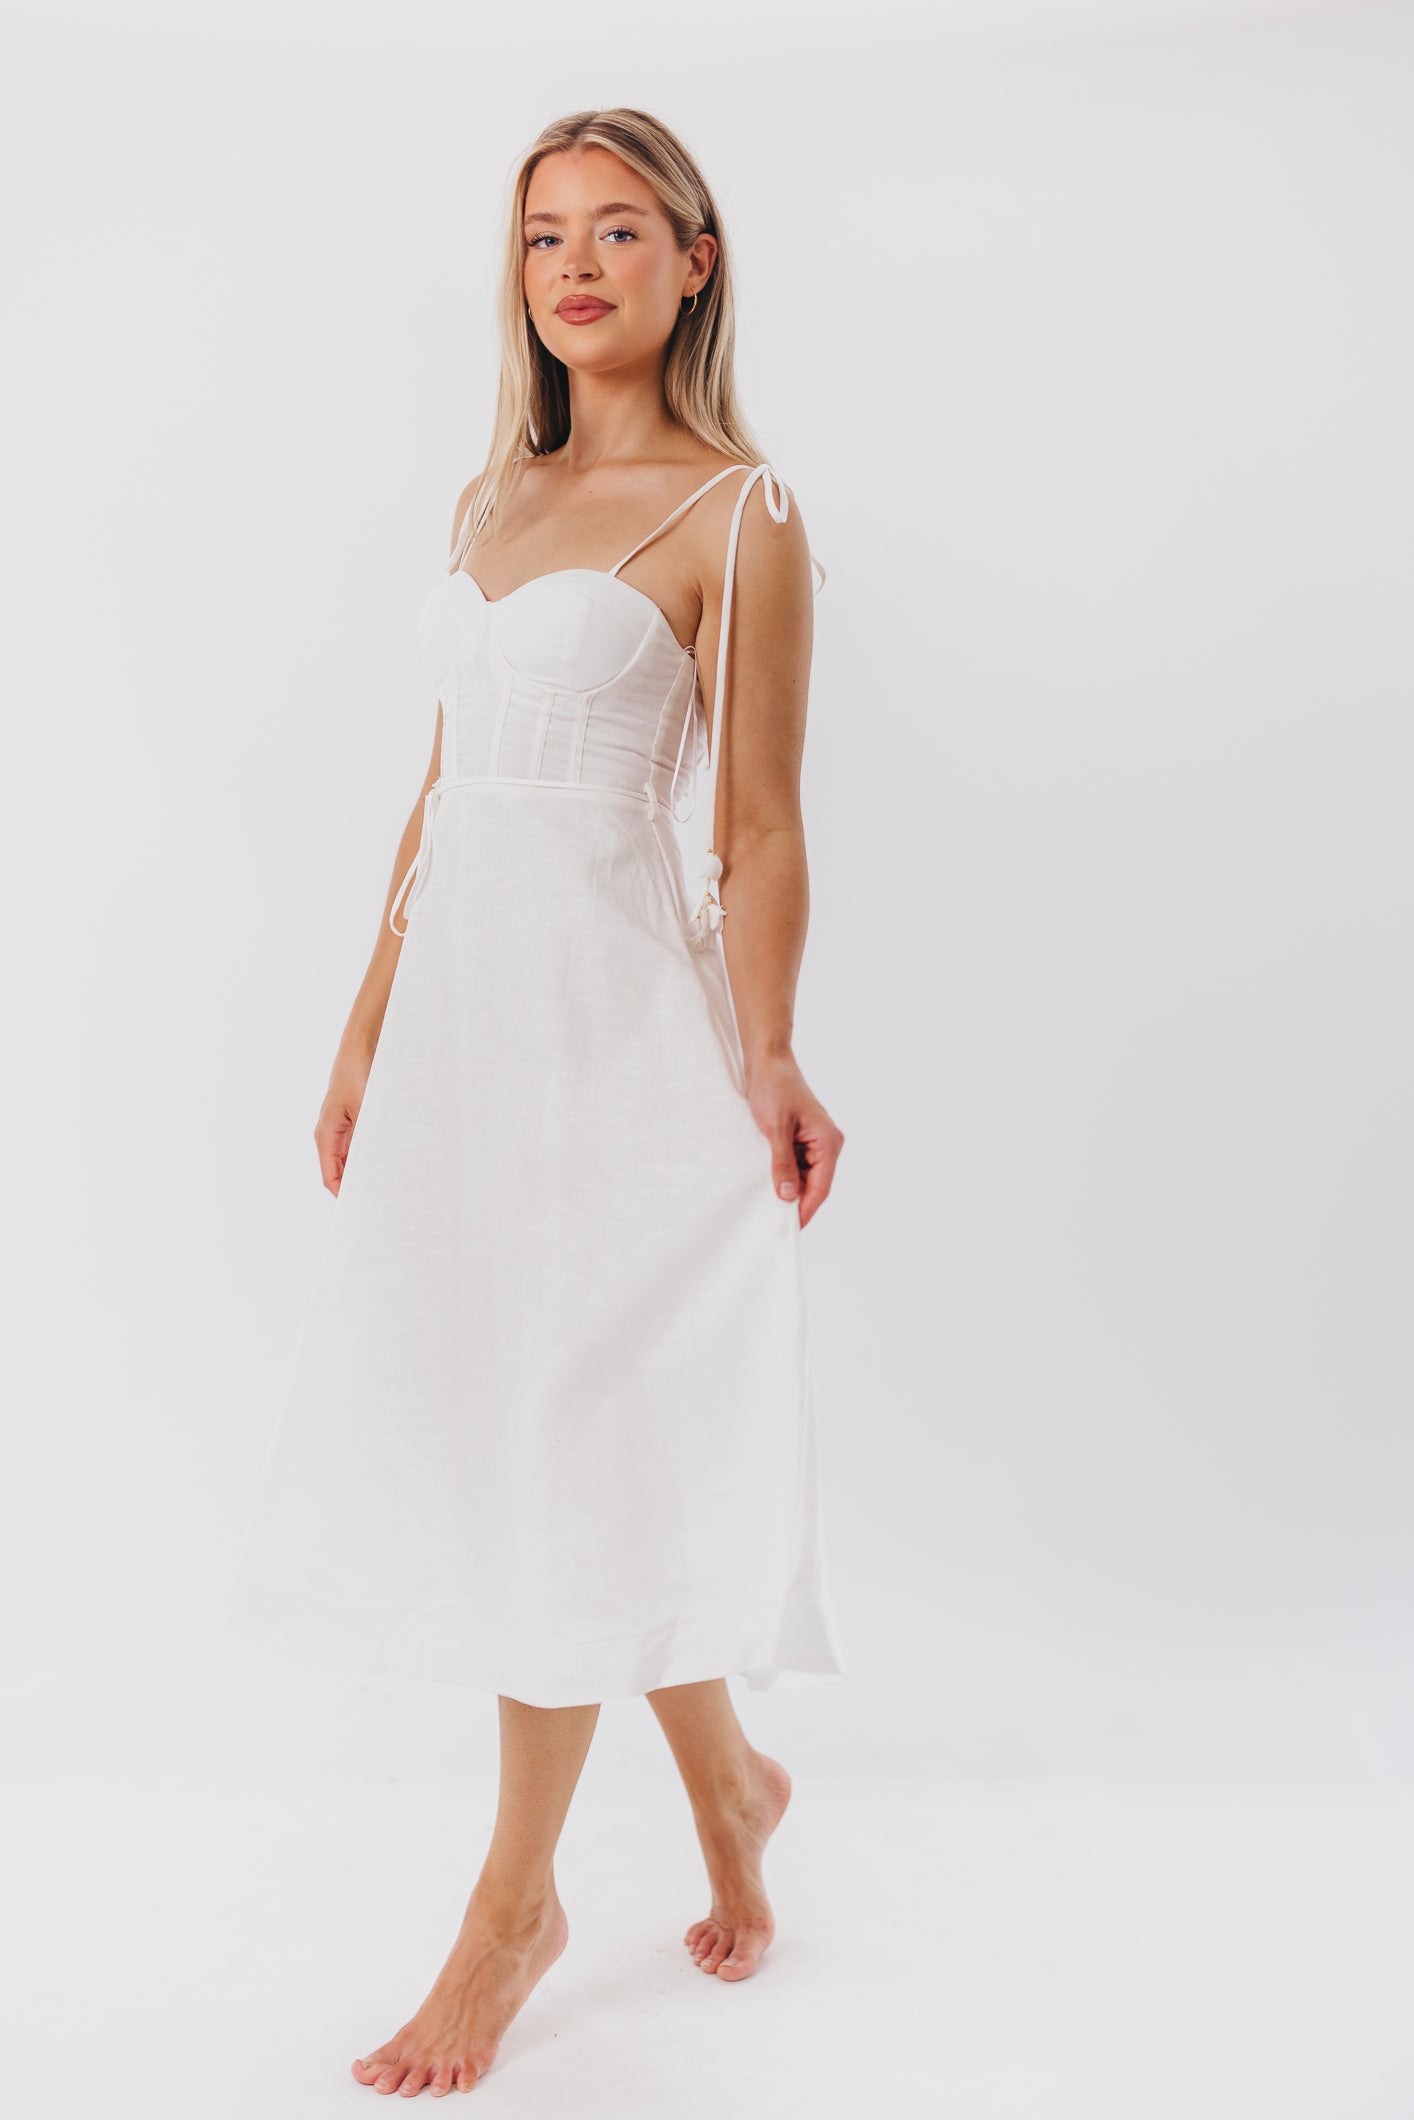 Norma Jean Bustier-Style Midi Dress in White